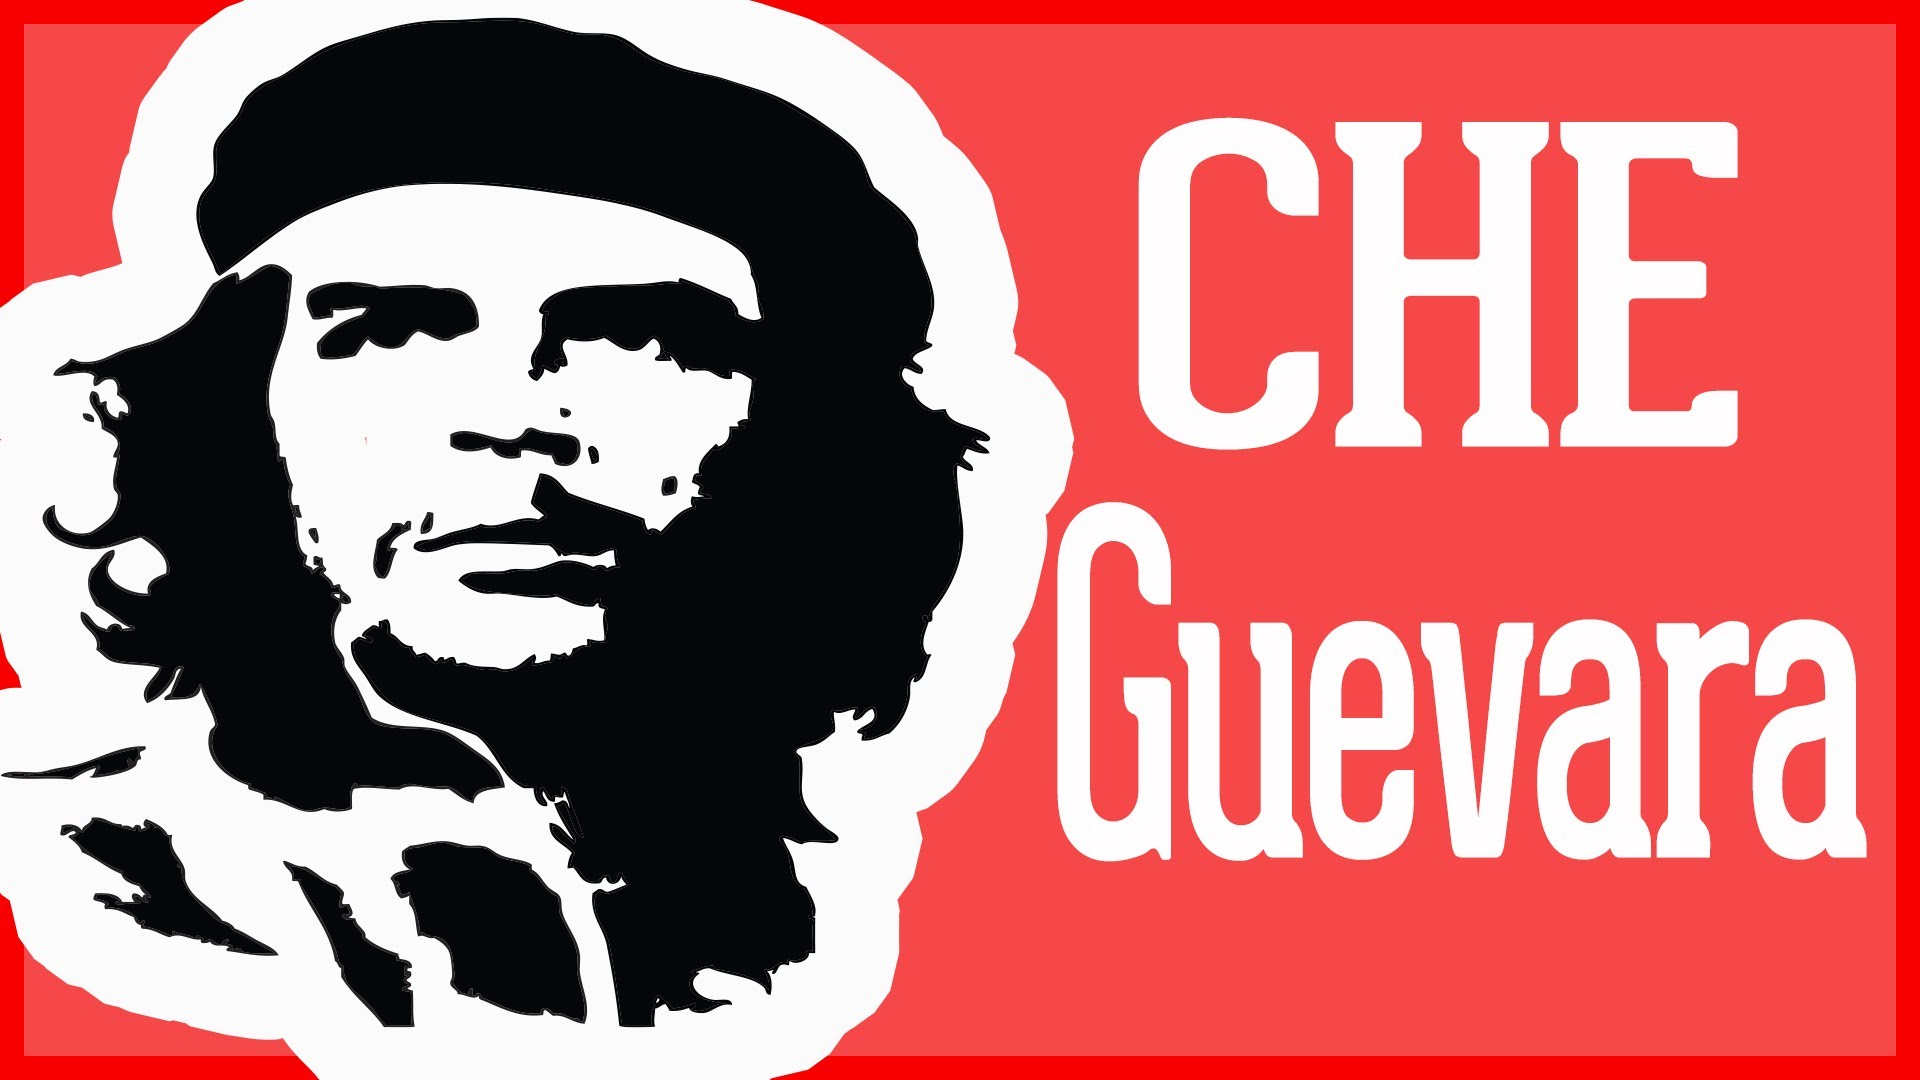 Che Guevara - Rare Full Documentary Here. WATCH NOW! - YouTube